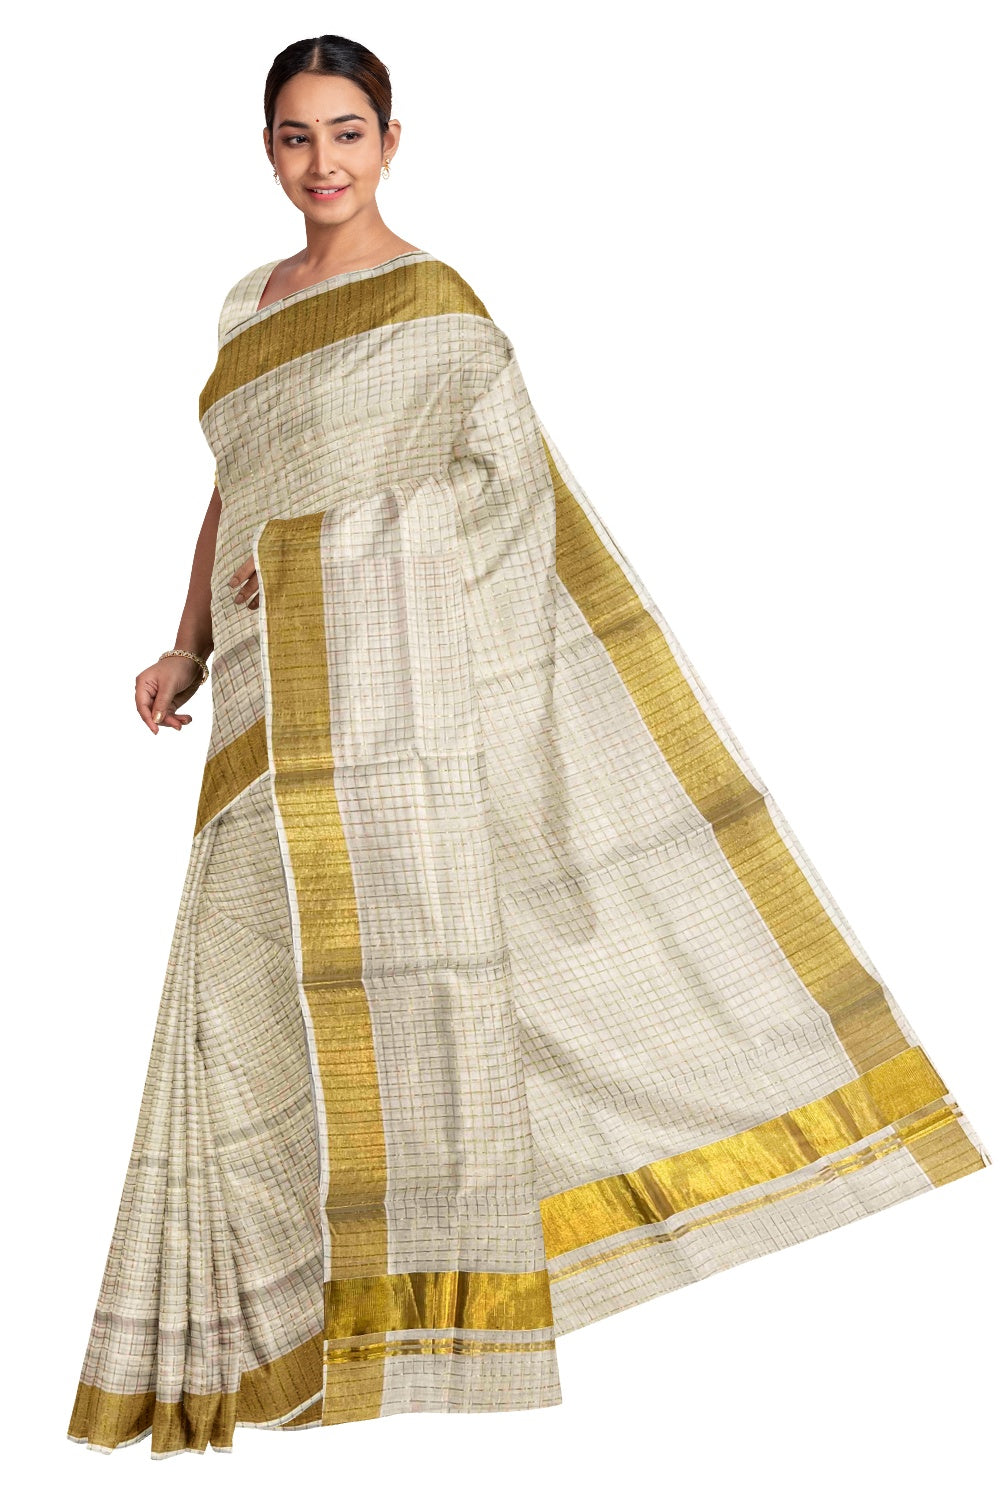 Southloom Premium Handloom Kerala Saree with Kasavu Check Design across Body